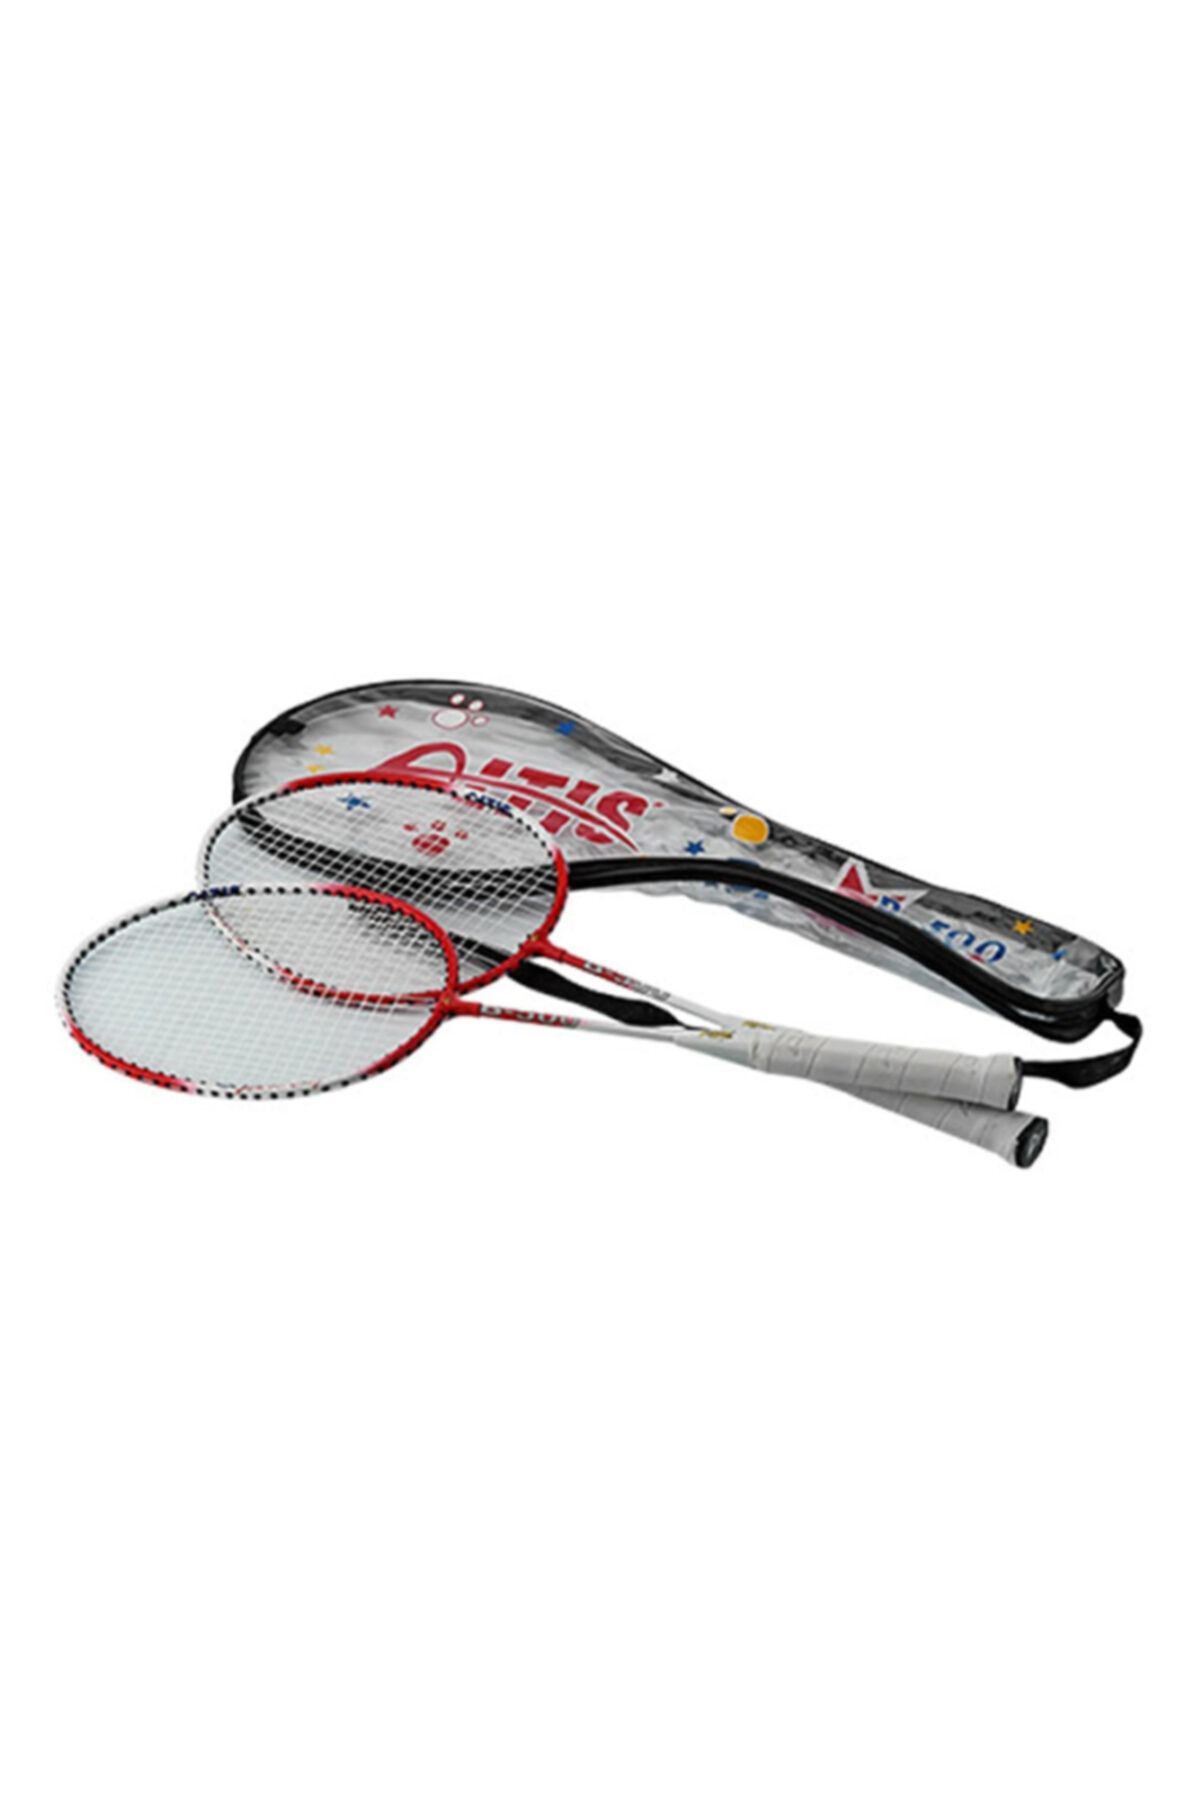 ALTIS B500 Badminton Raket